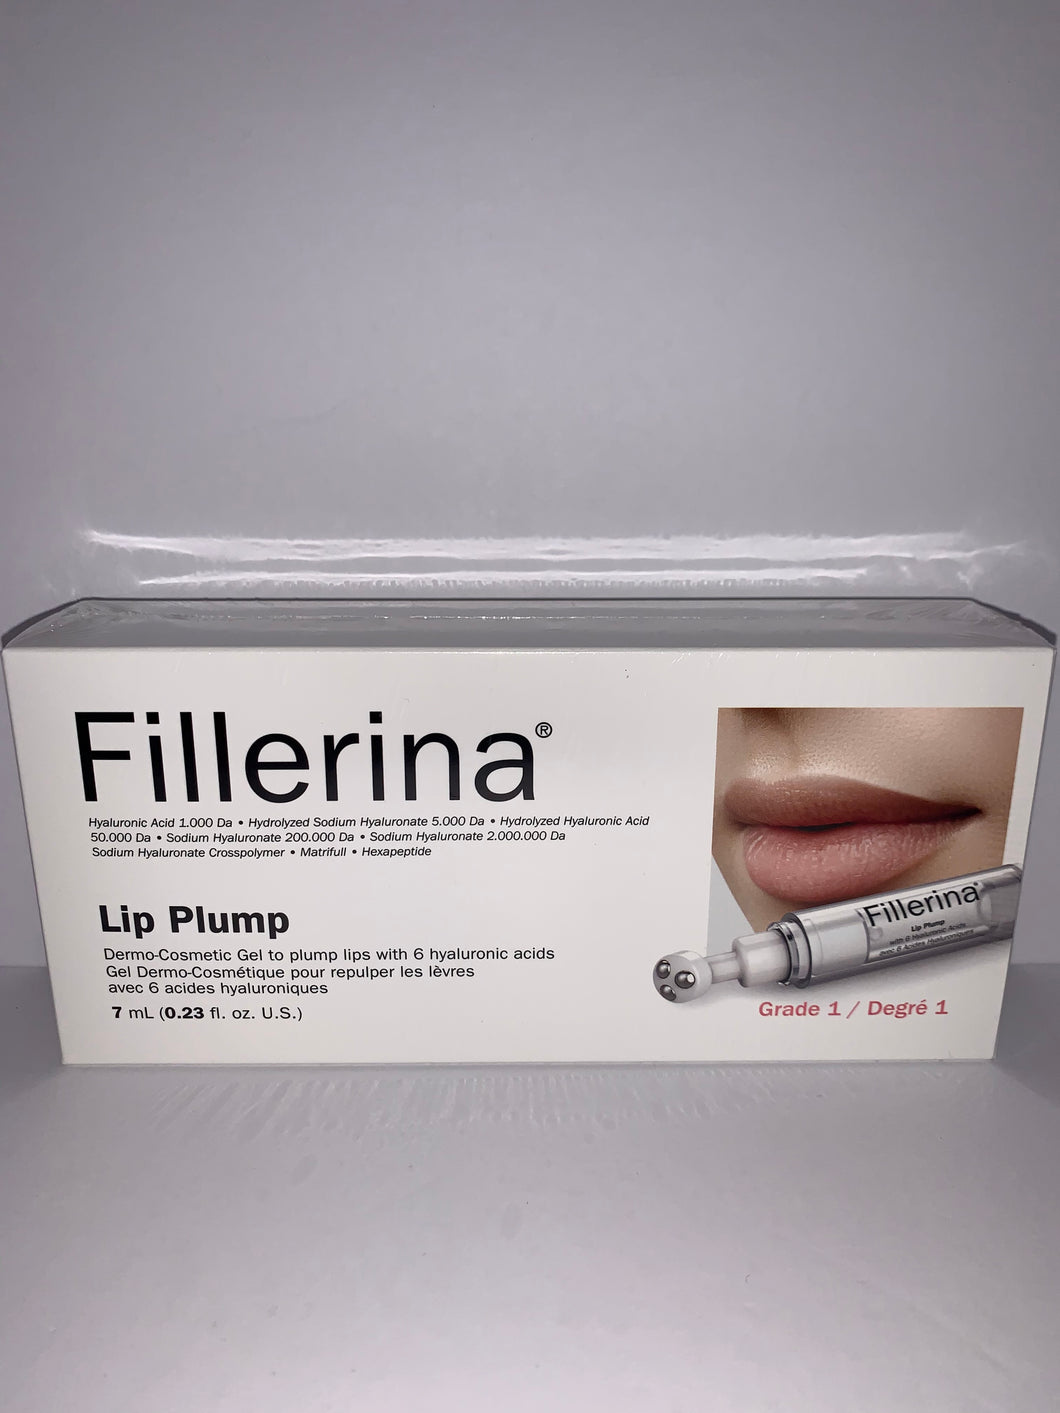 Fillerina Lip Plump   (grade 1, Degrè 1)